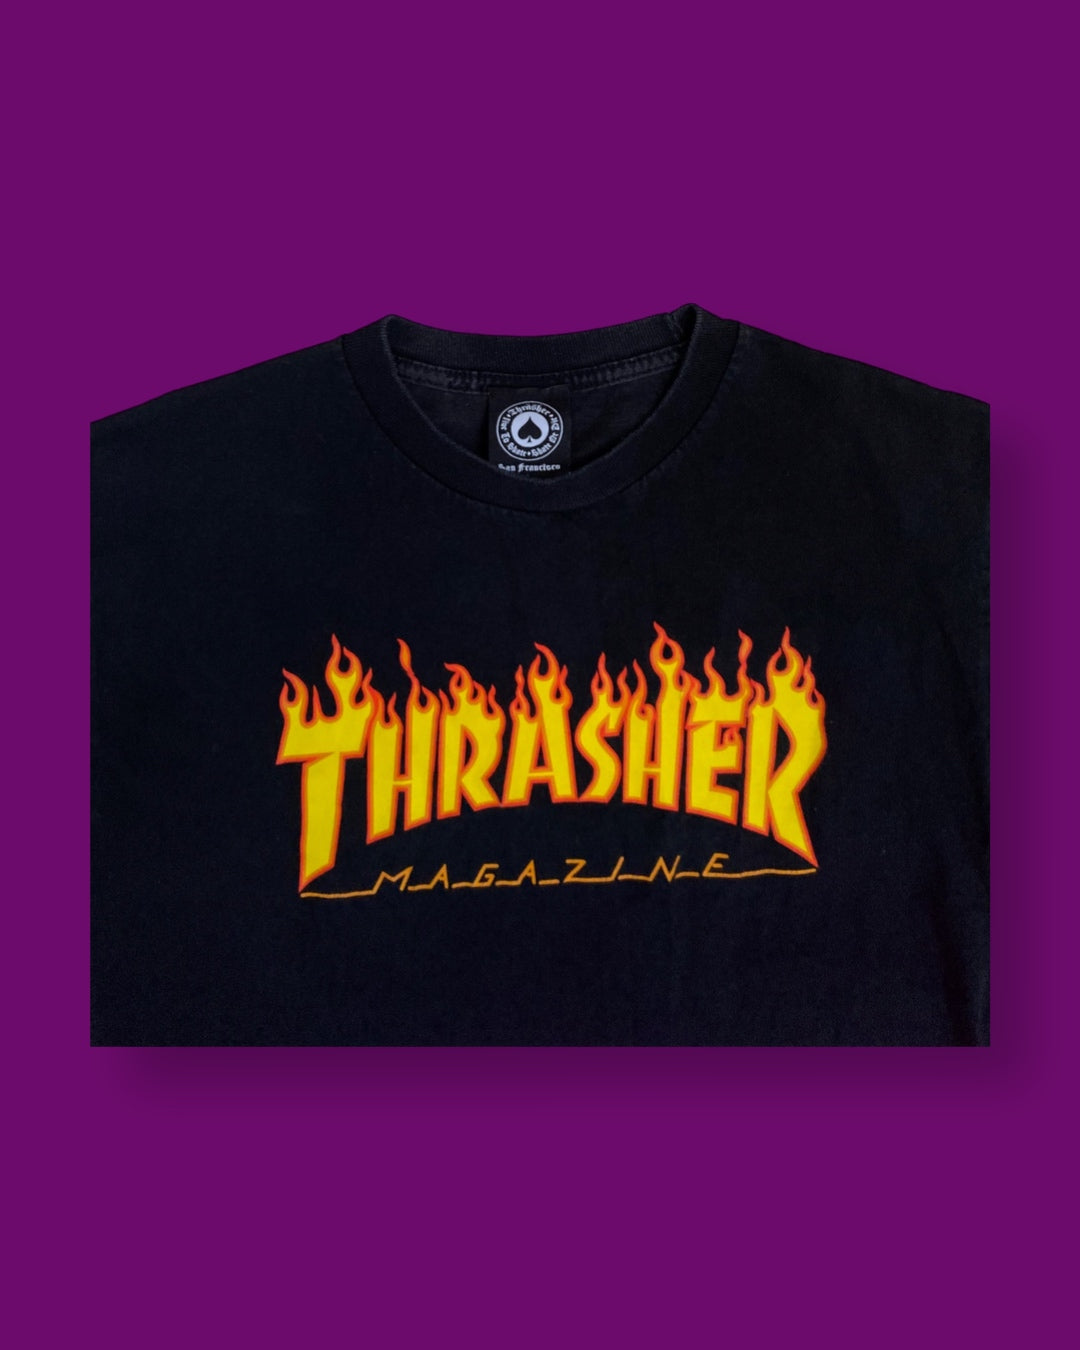 Trasher T-Shirt